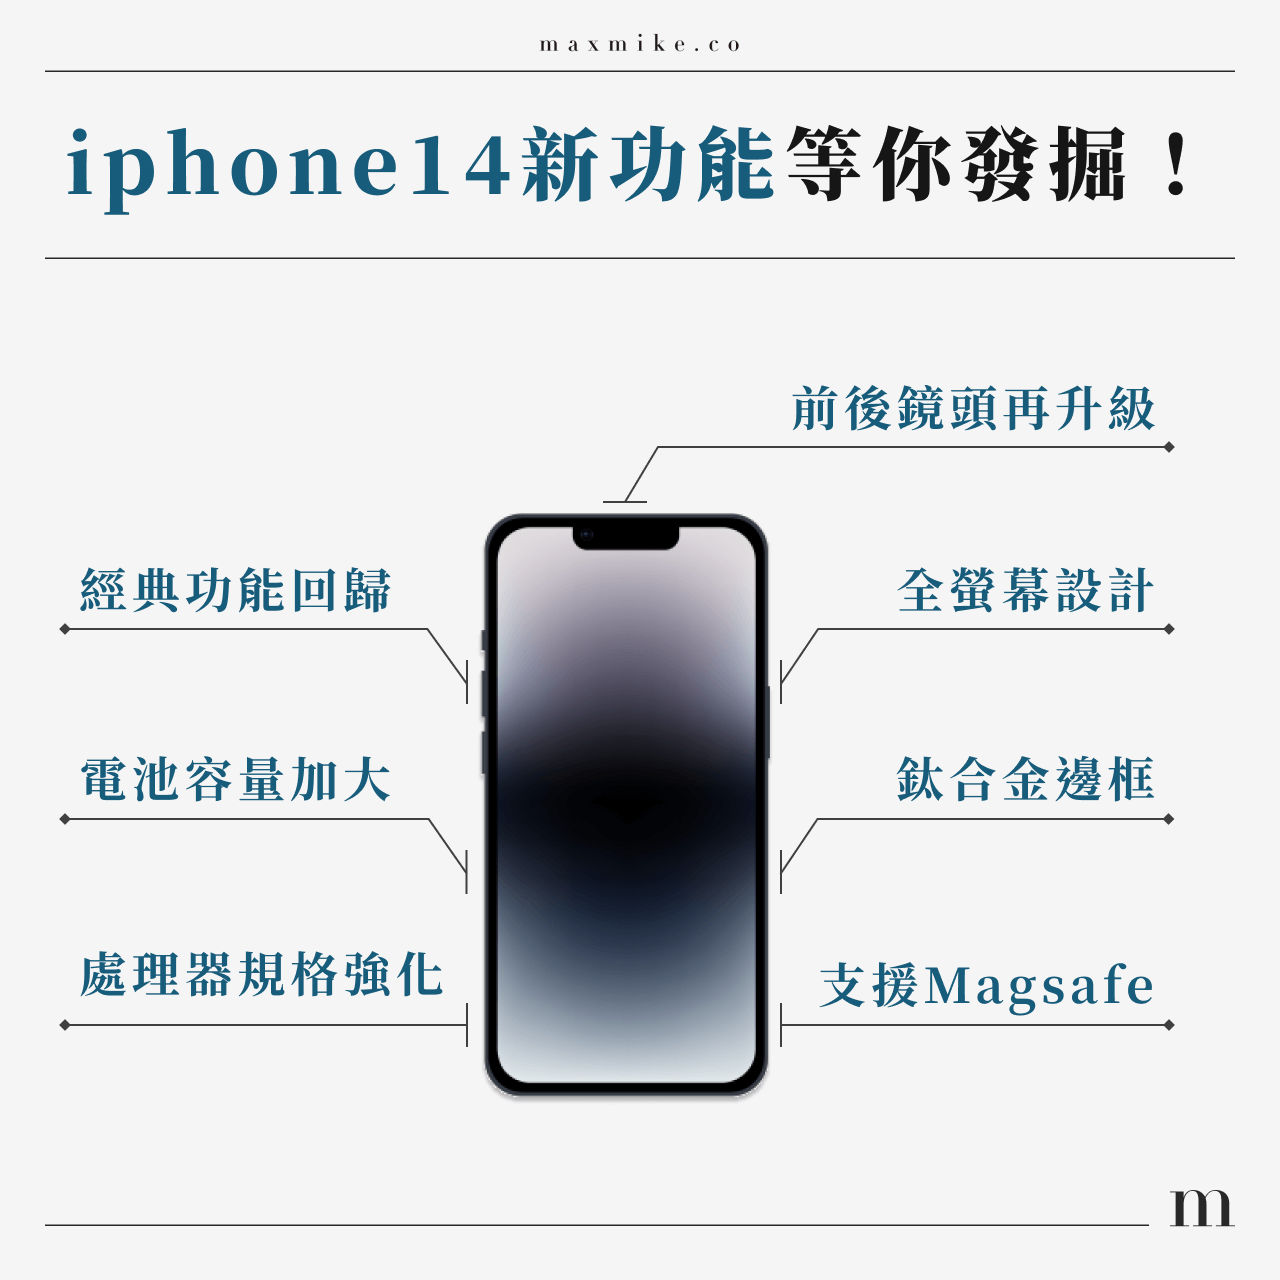 iphone14新功能整理